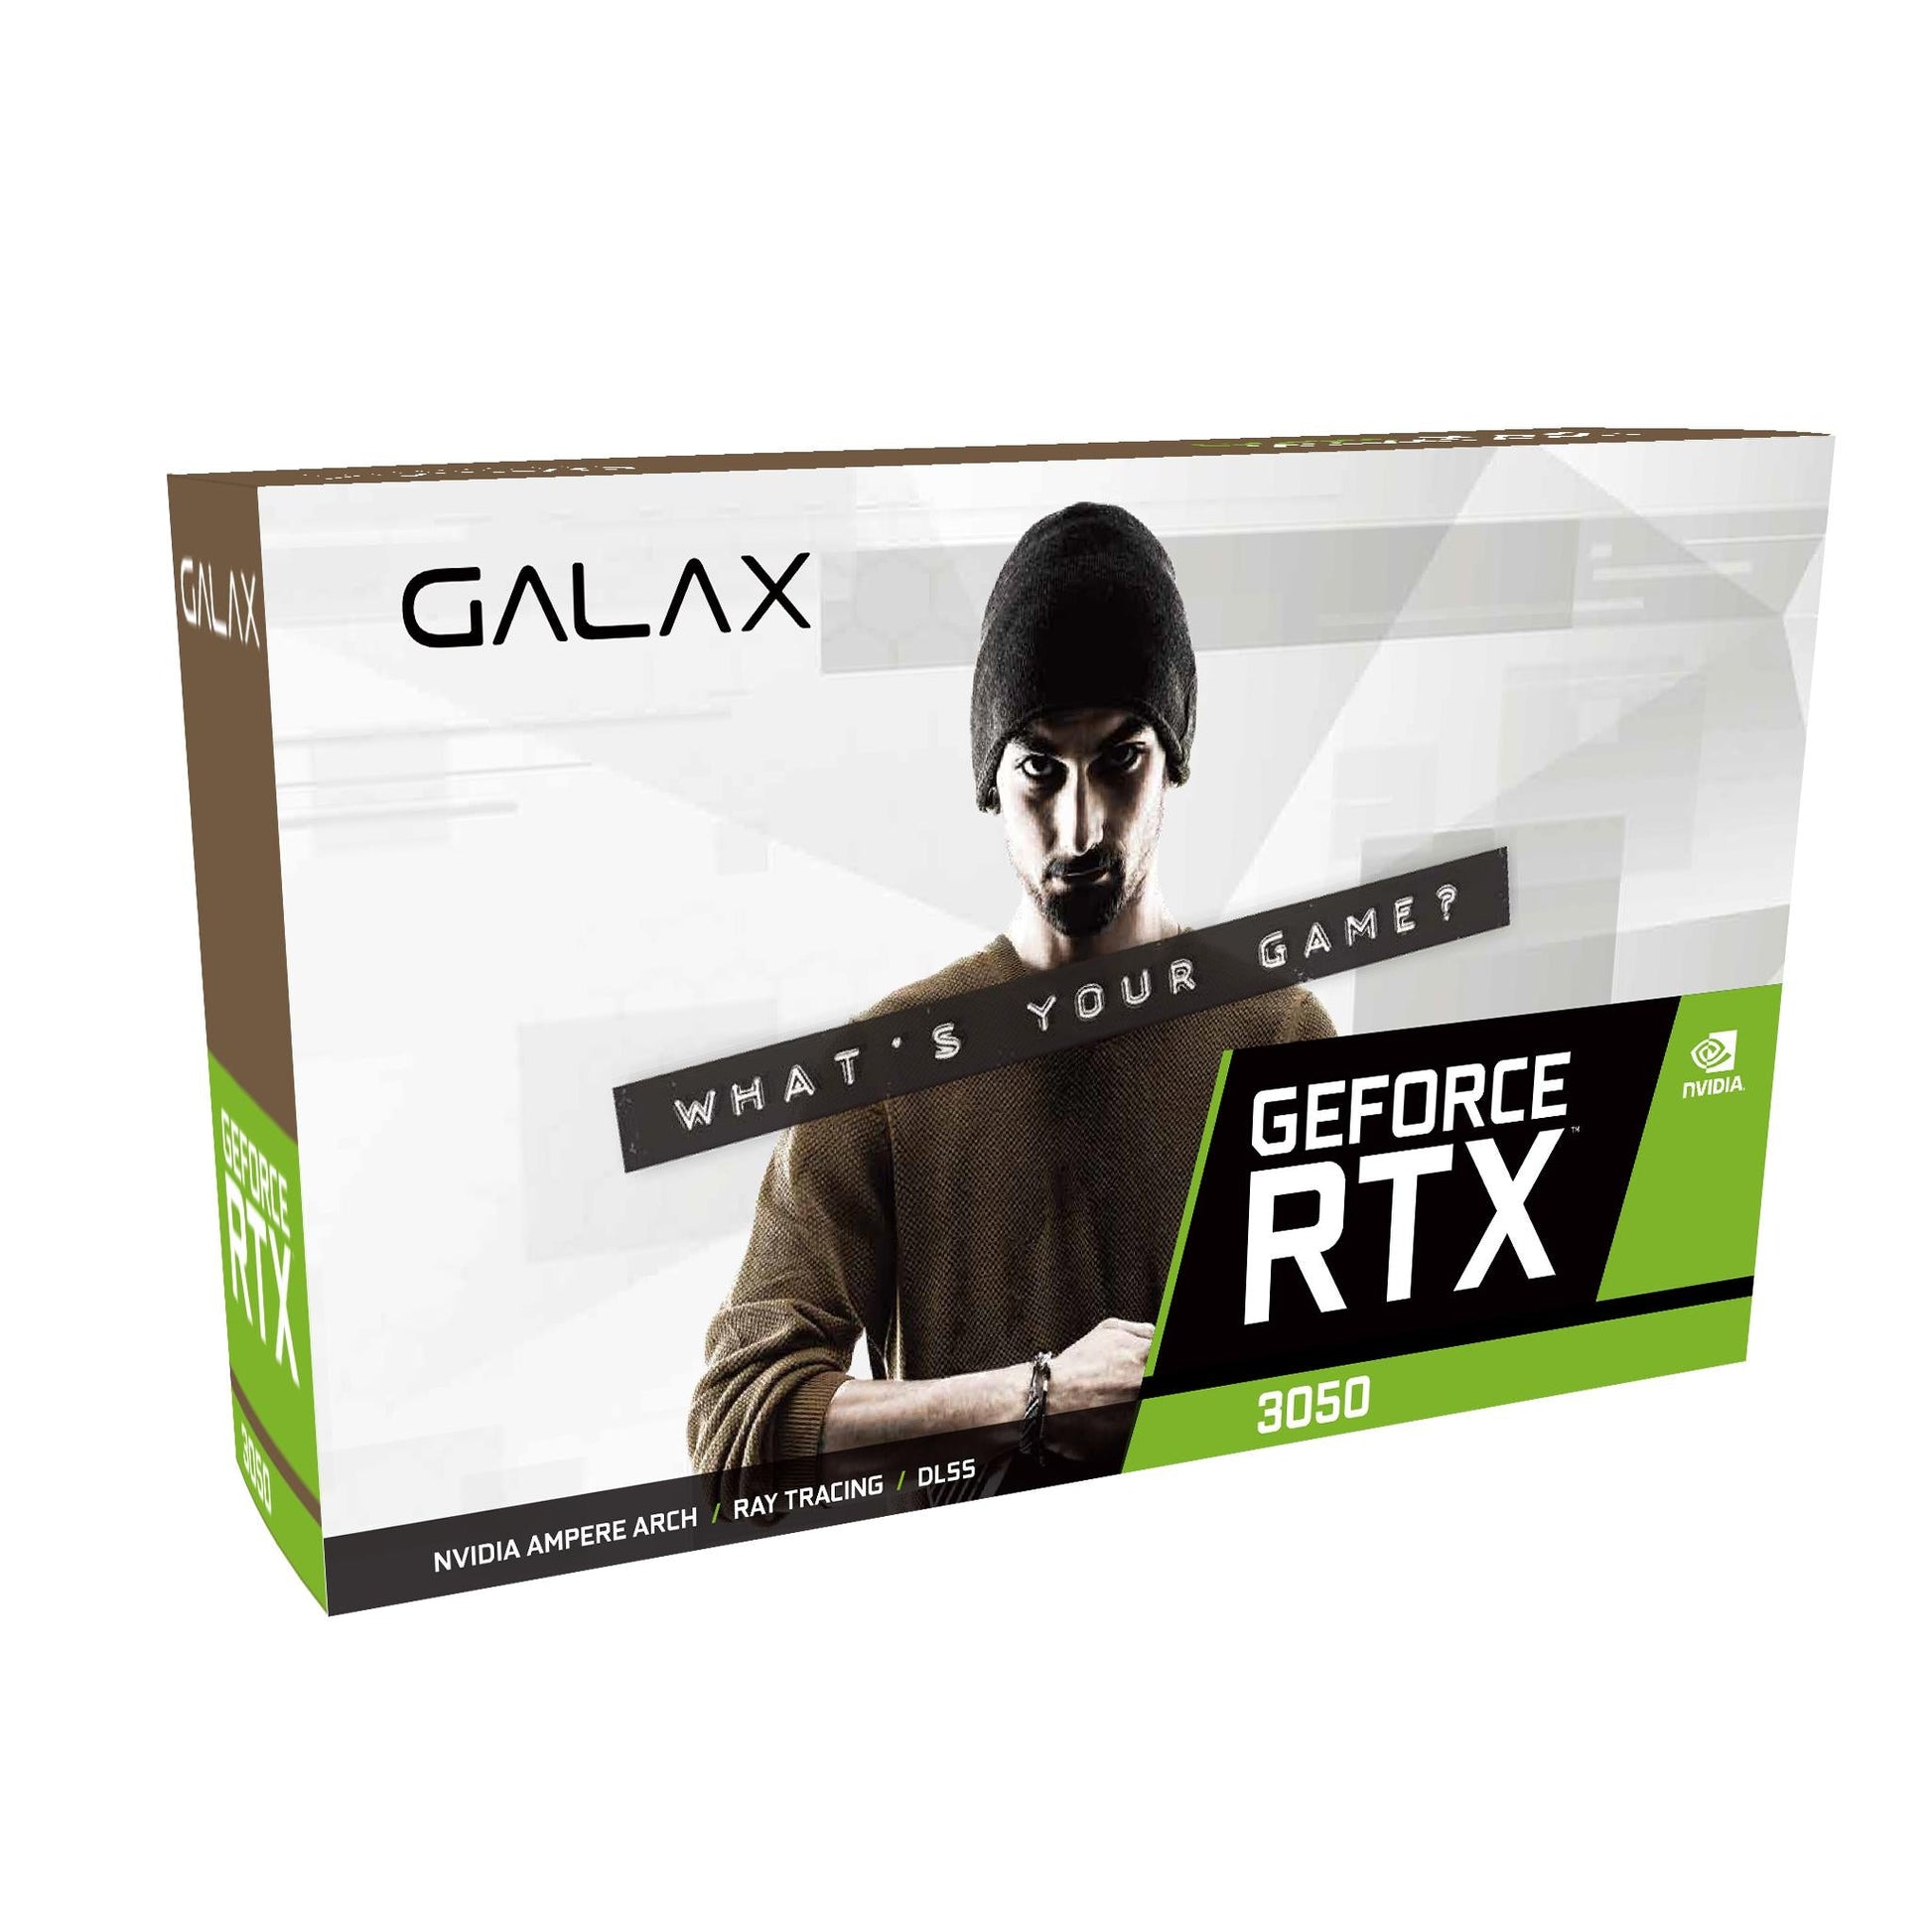 GALAX GEFORCE RTX™ 3050 V2 (1-CLICK OC FEATURE) 8GB GDDR6 128-BIT DP*3/HDMI GRAPHICS CARD-GRAPHICS CARD-Makotek Computers